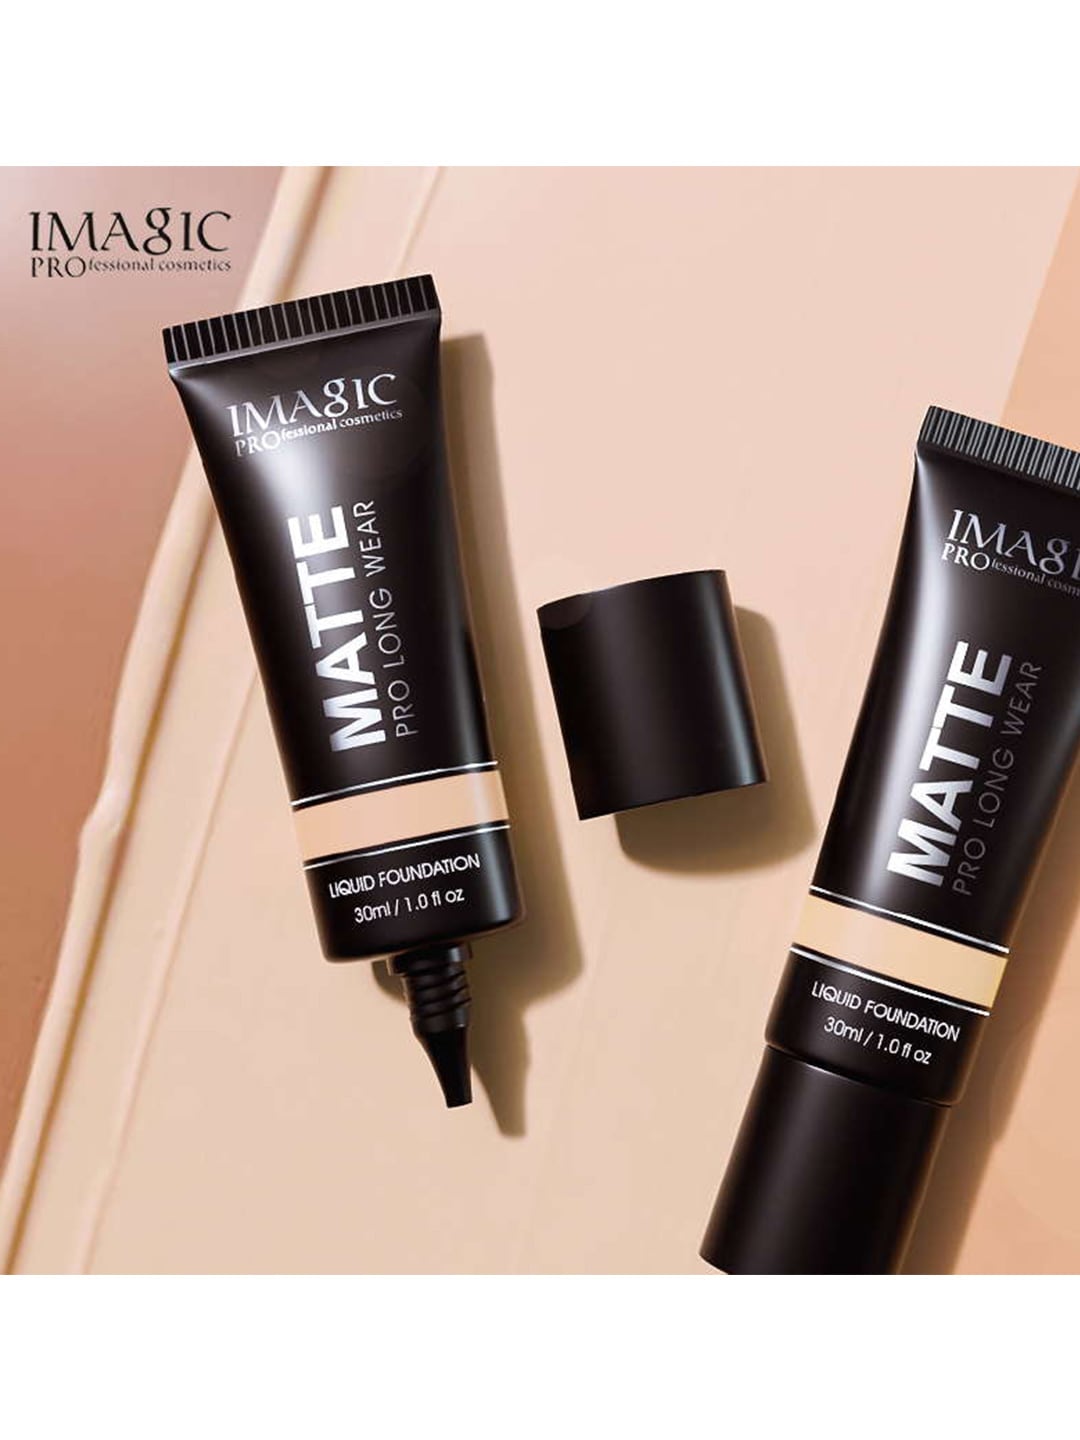 IMAGIC PROfessional cosmetics Matte Pro Long Wear Foundation - N145 Beige Price in India